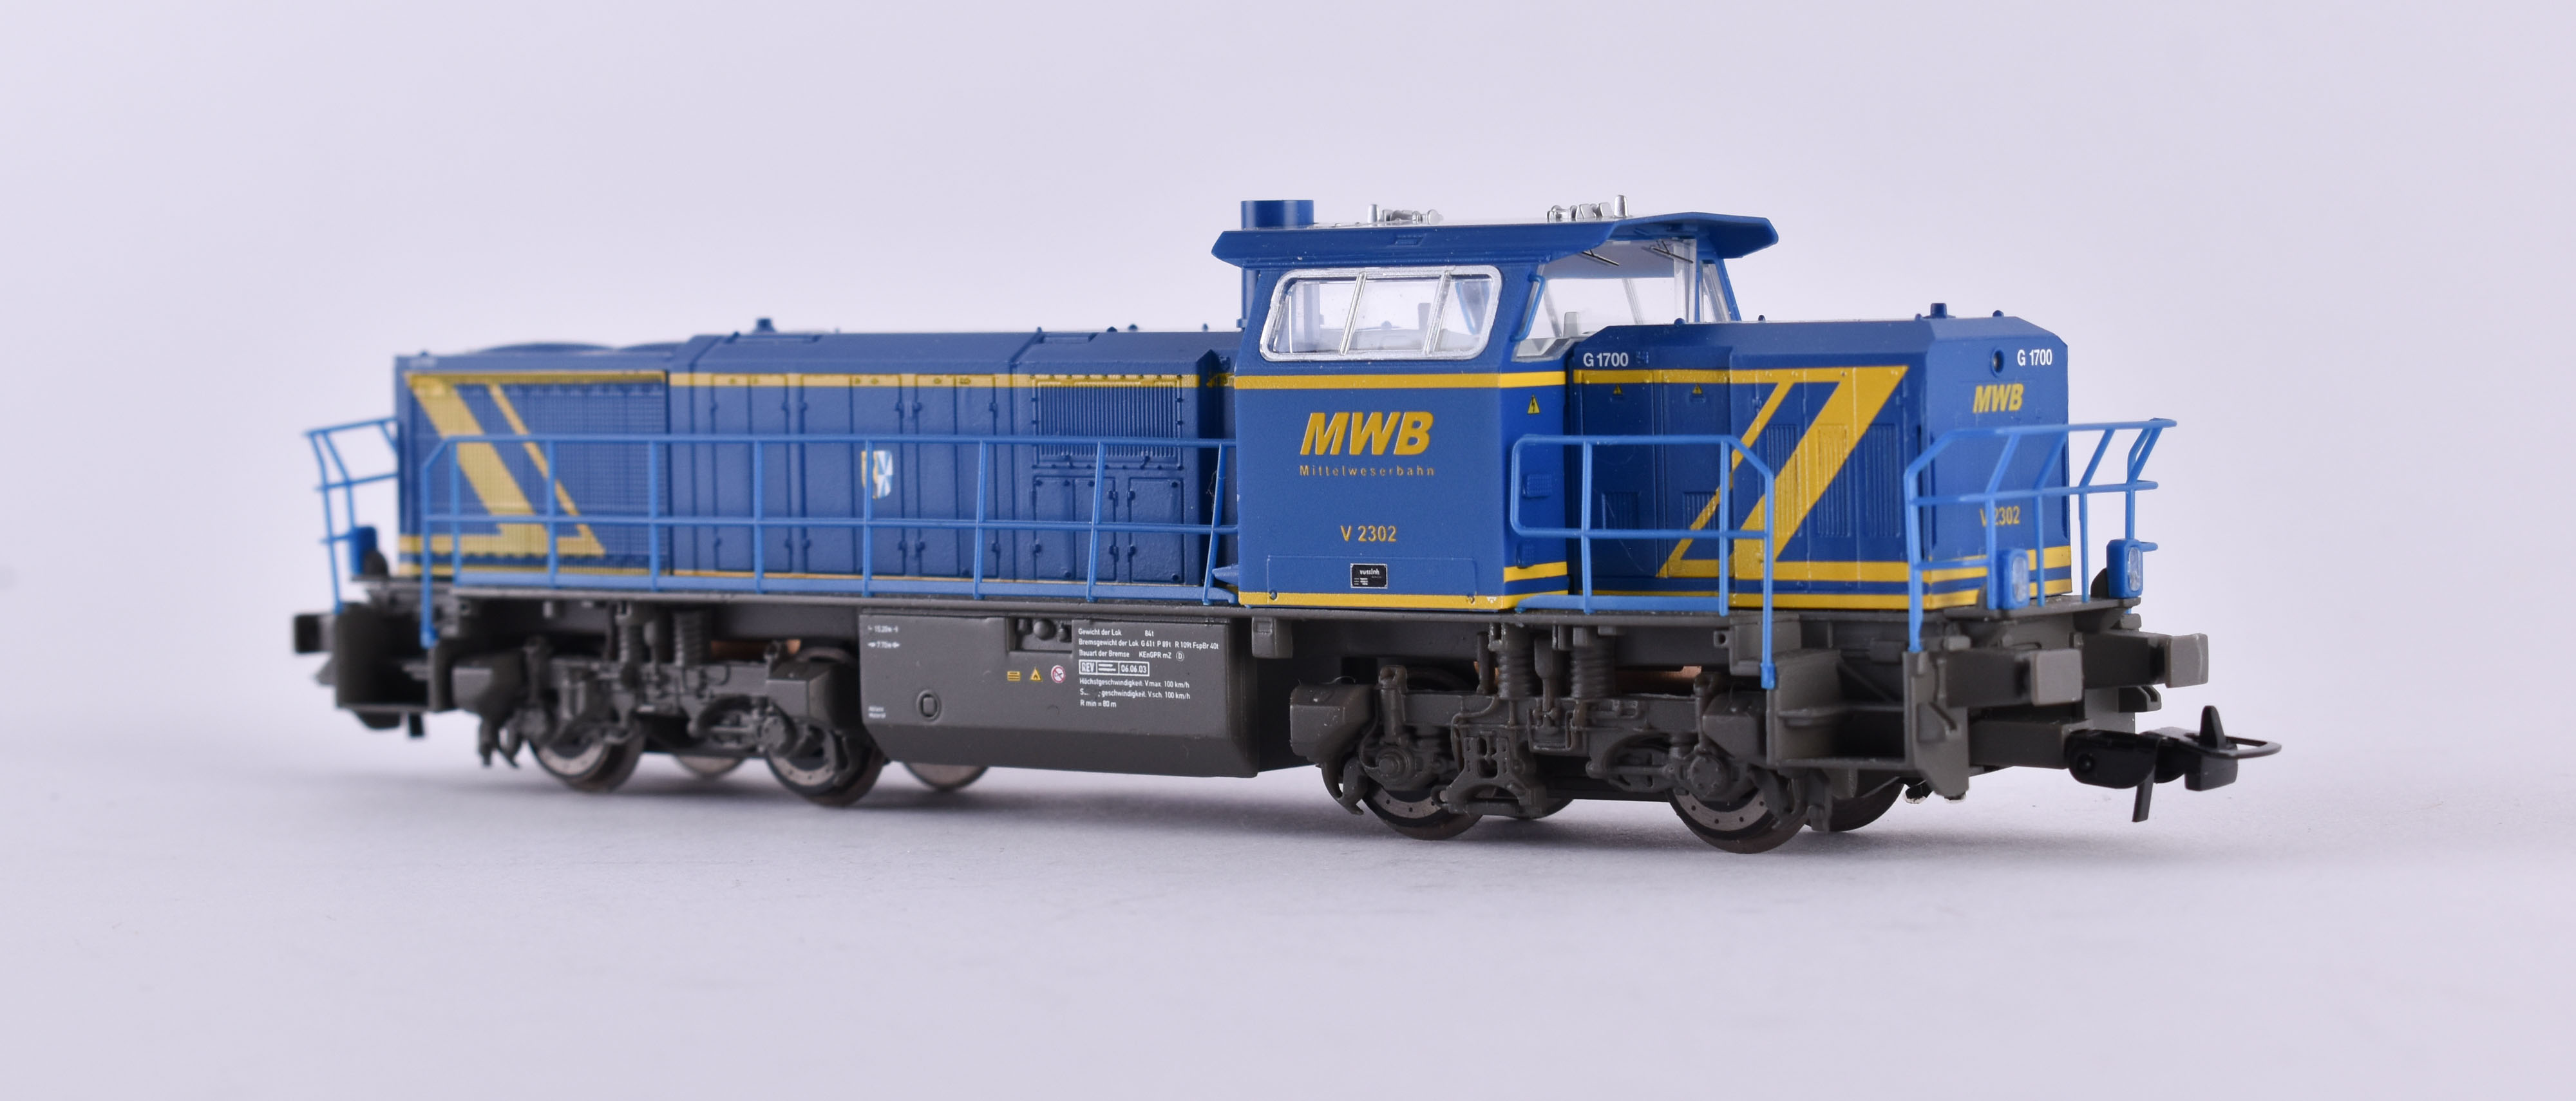 Diesel locomotive G 1700 MWB - Piko - Image 2 of 3